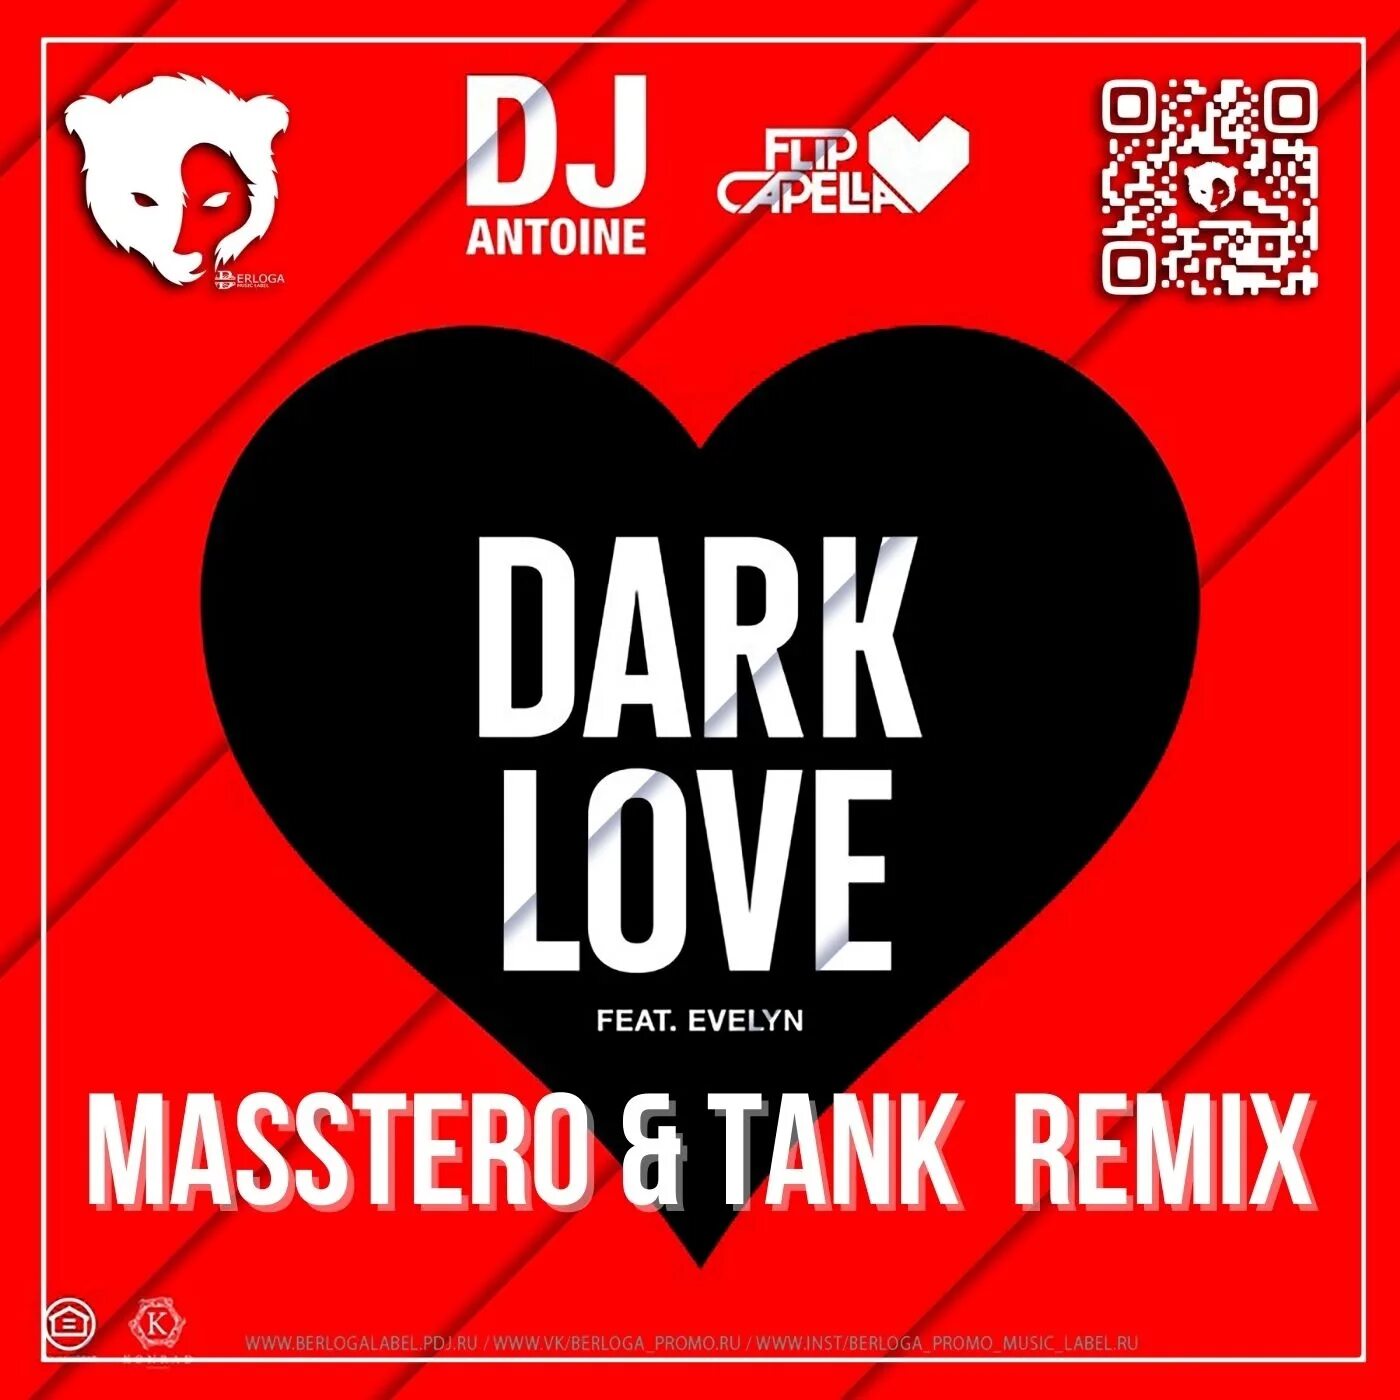 Dark Love магазин. Remixes by Tank. Дарк лова лова